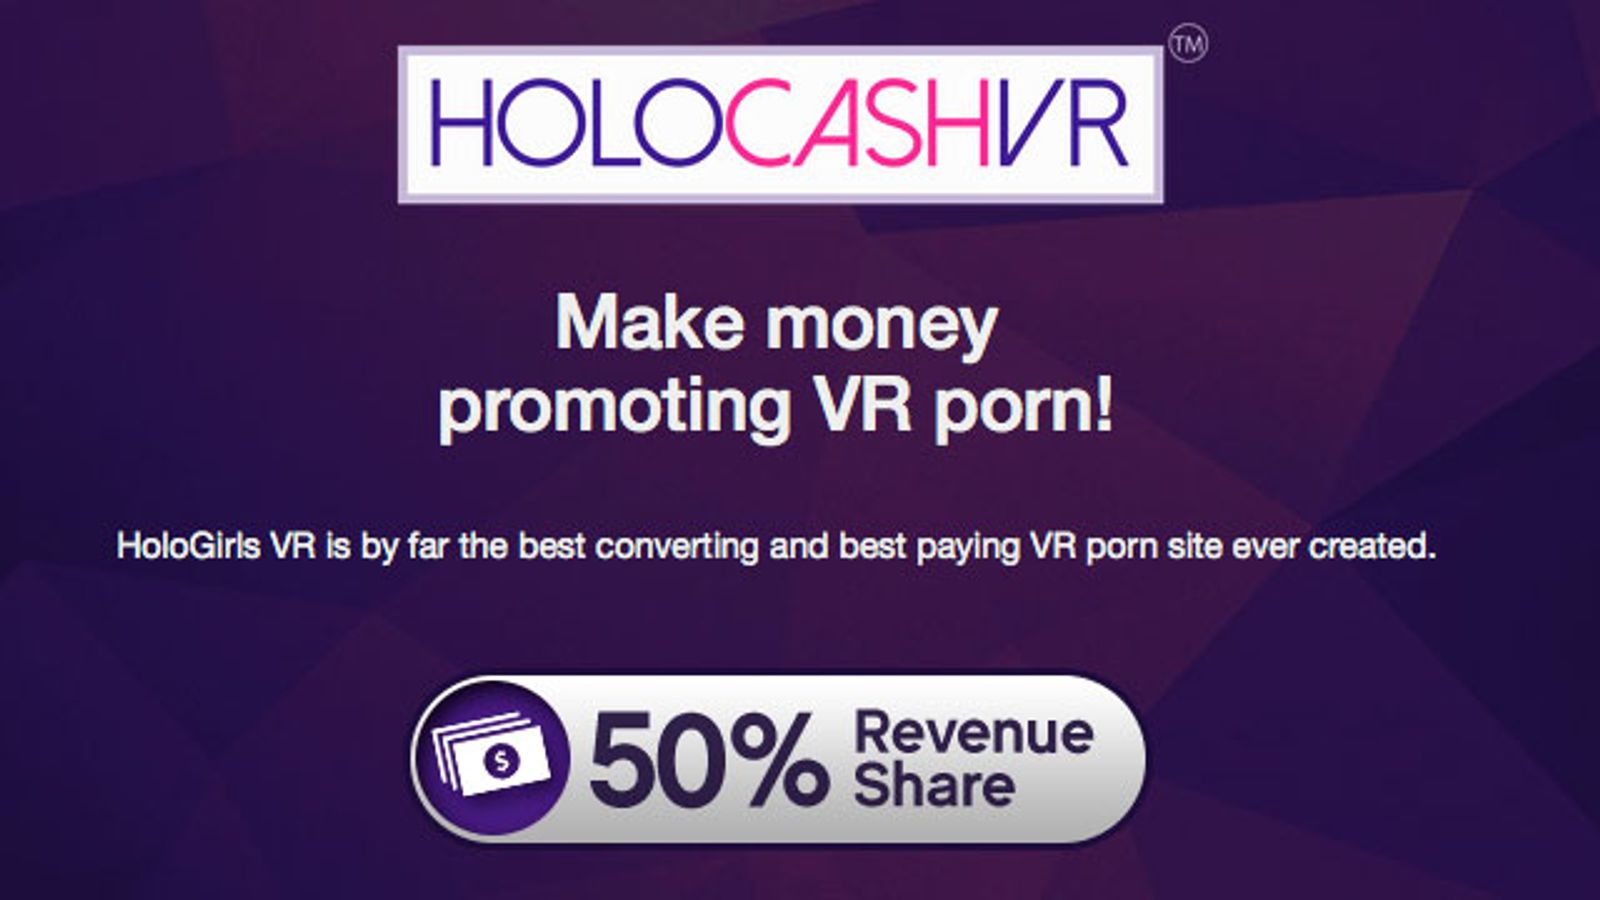 HoloFilm Launches VR Affiliate Program